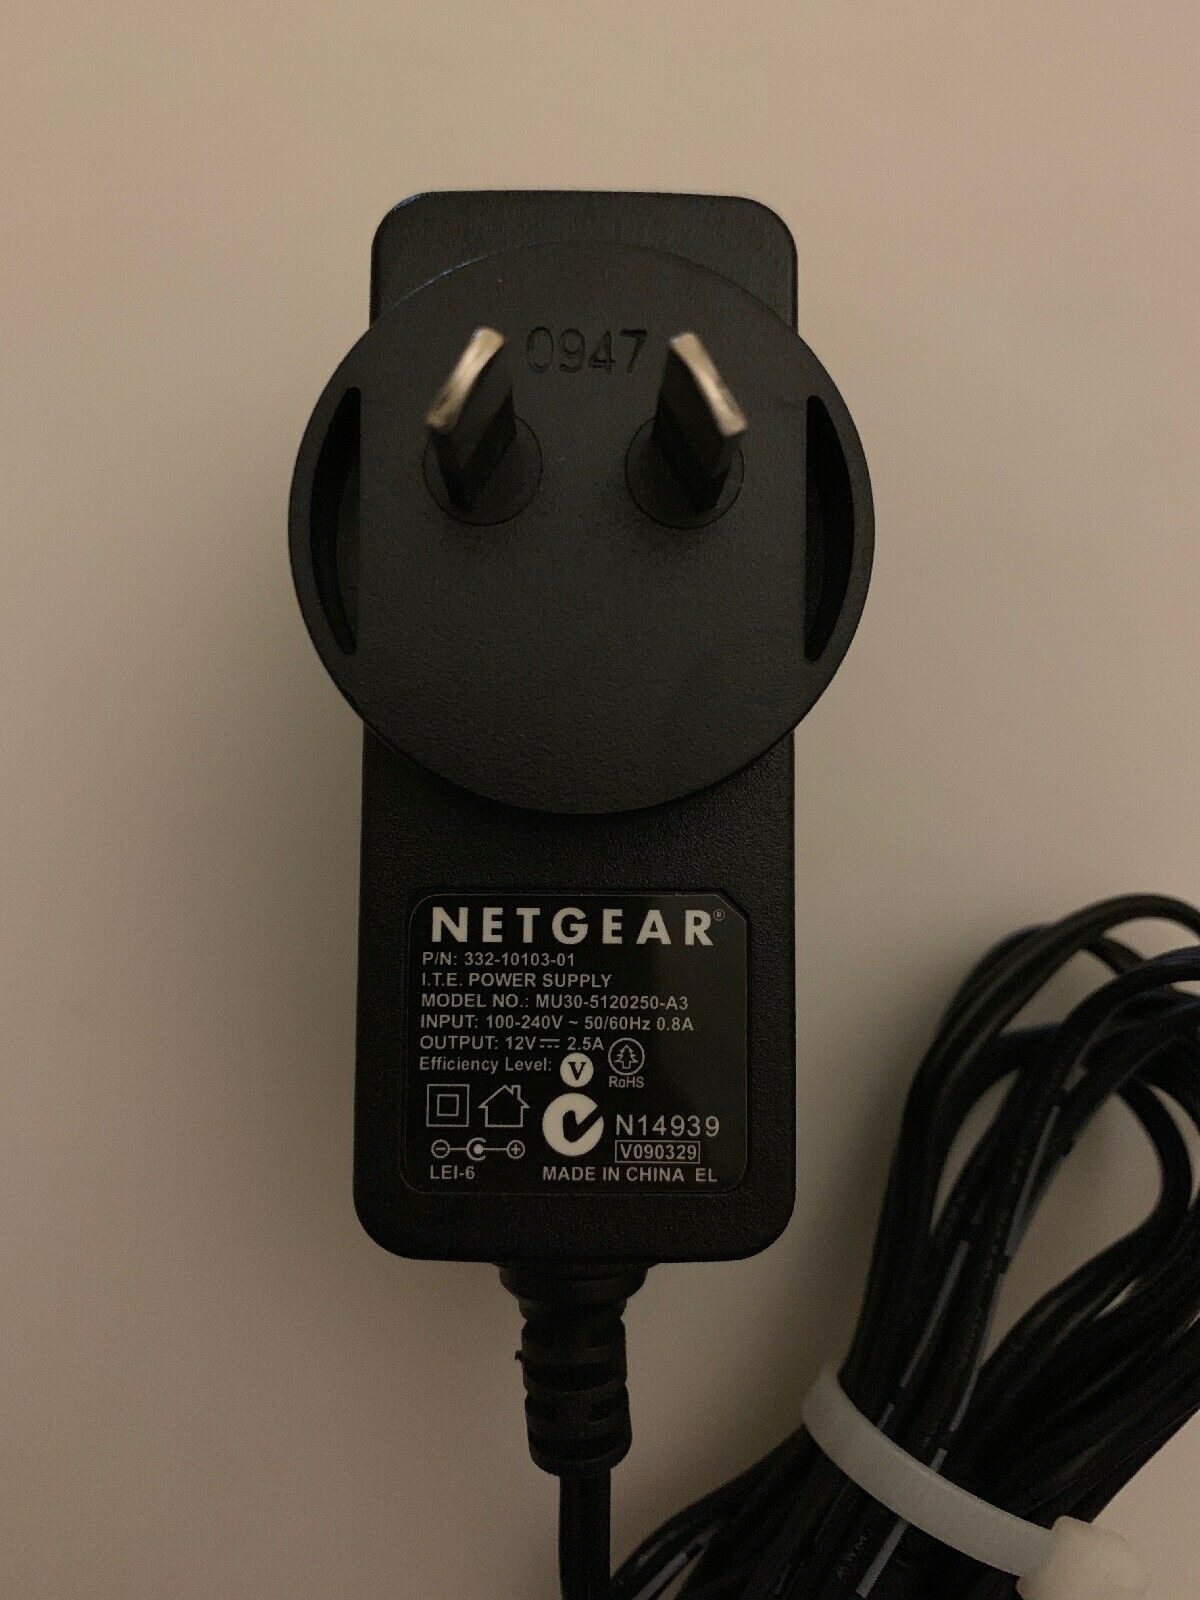 New Netgear MU30-5120250 332-10103-01 Power Supply 12V 2.5A AC Adapter AU PLUG - Click Image to Close